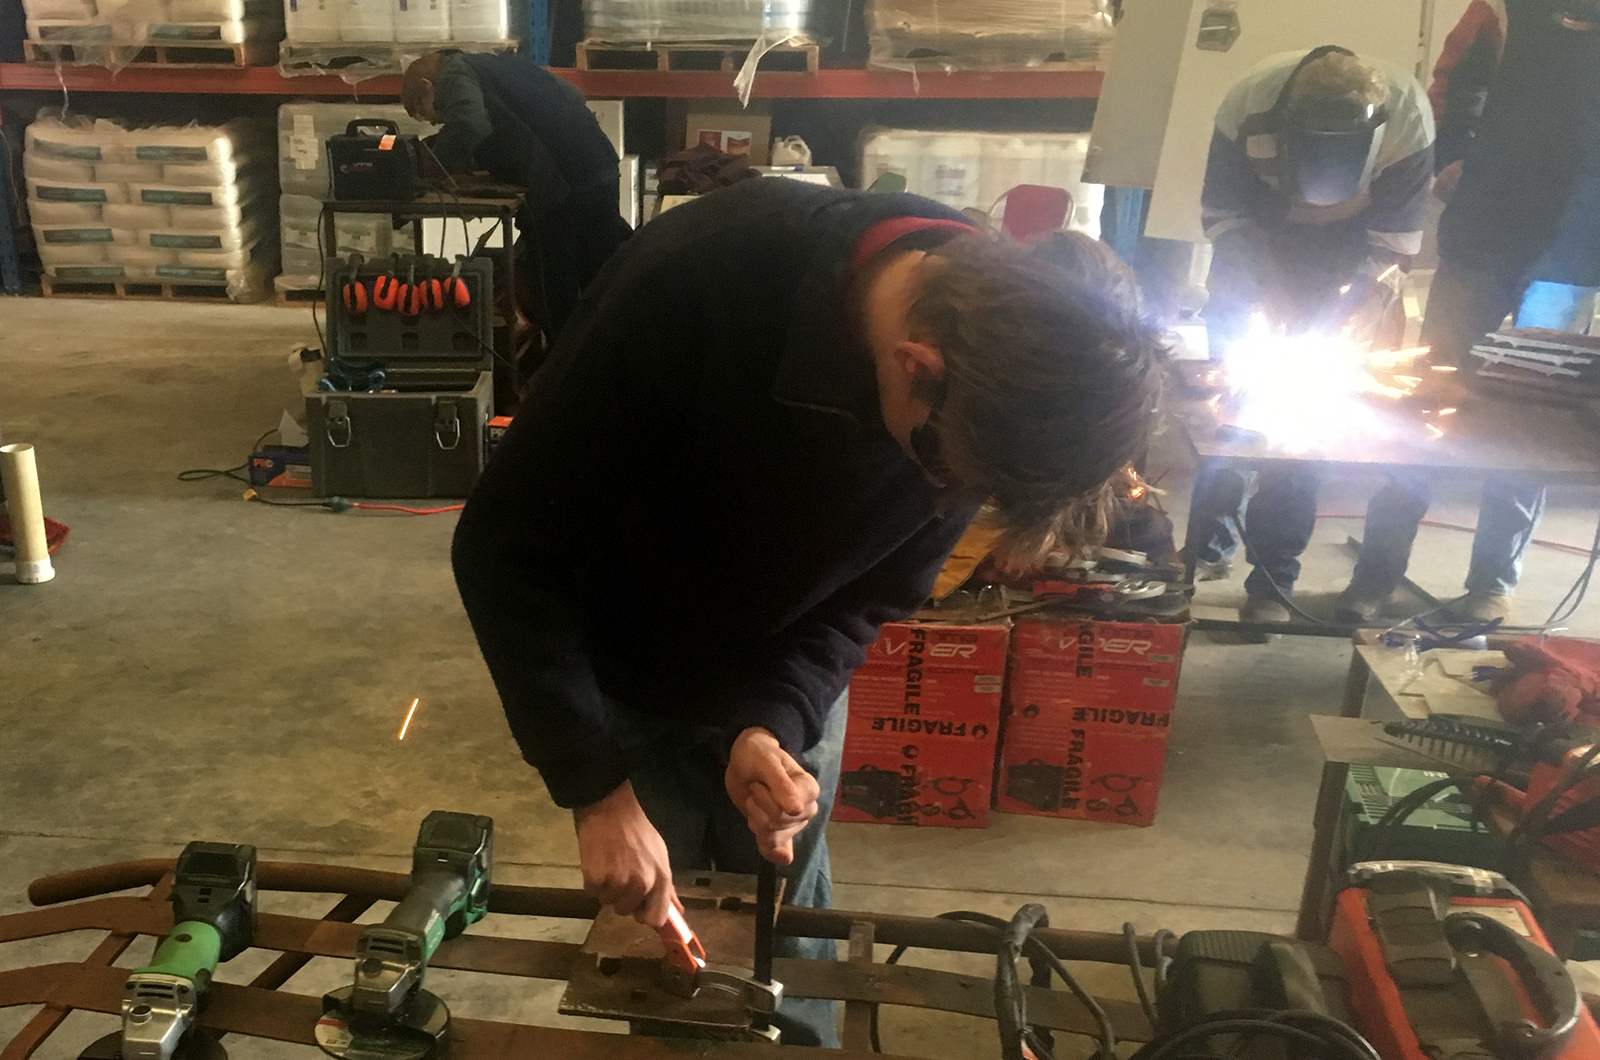 Students welding in the workshop